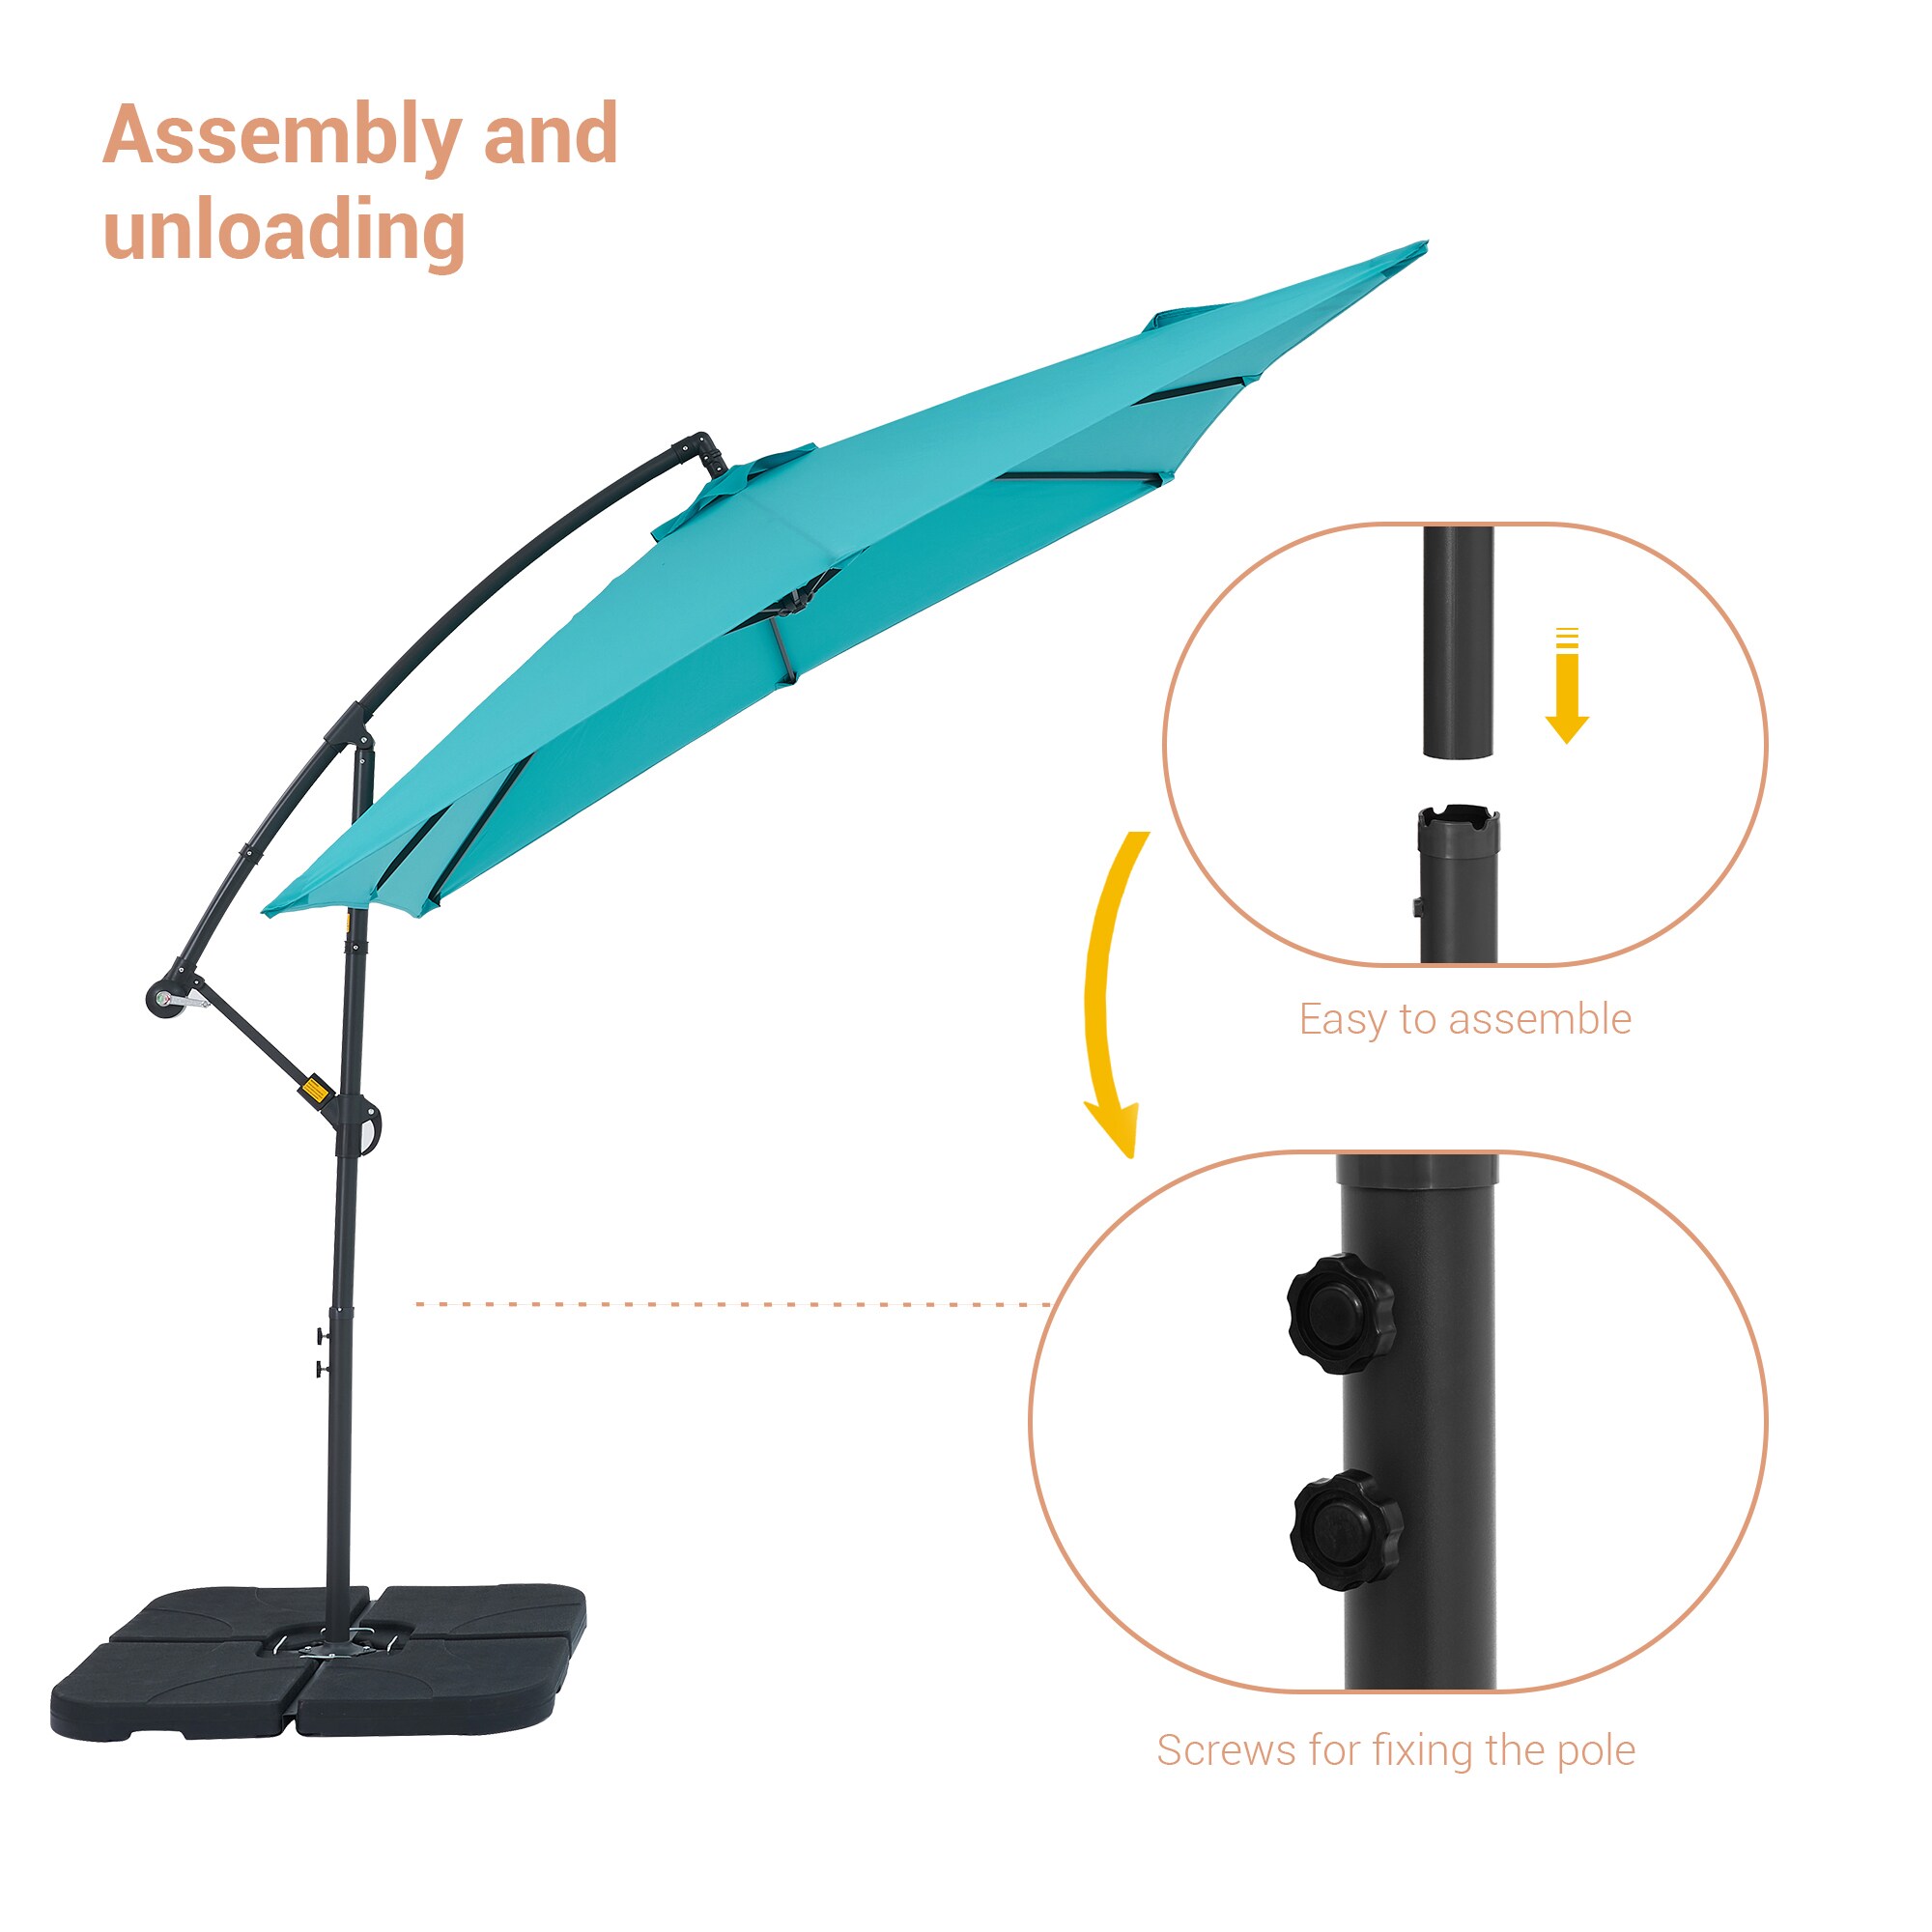 ACEGOSES 8.2-ft Turquoise No-tilt Offset Patio Umbrella with Base 